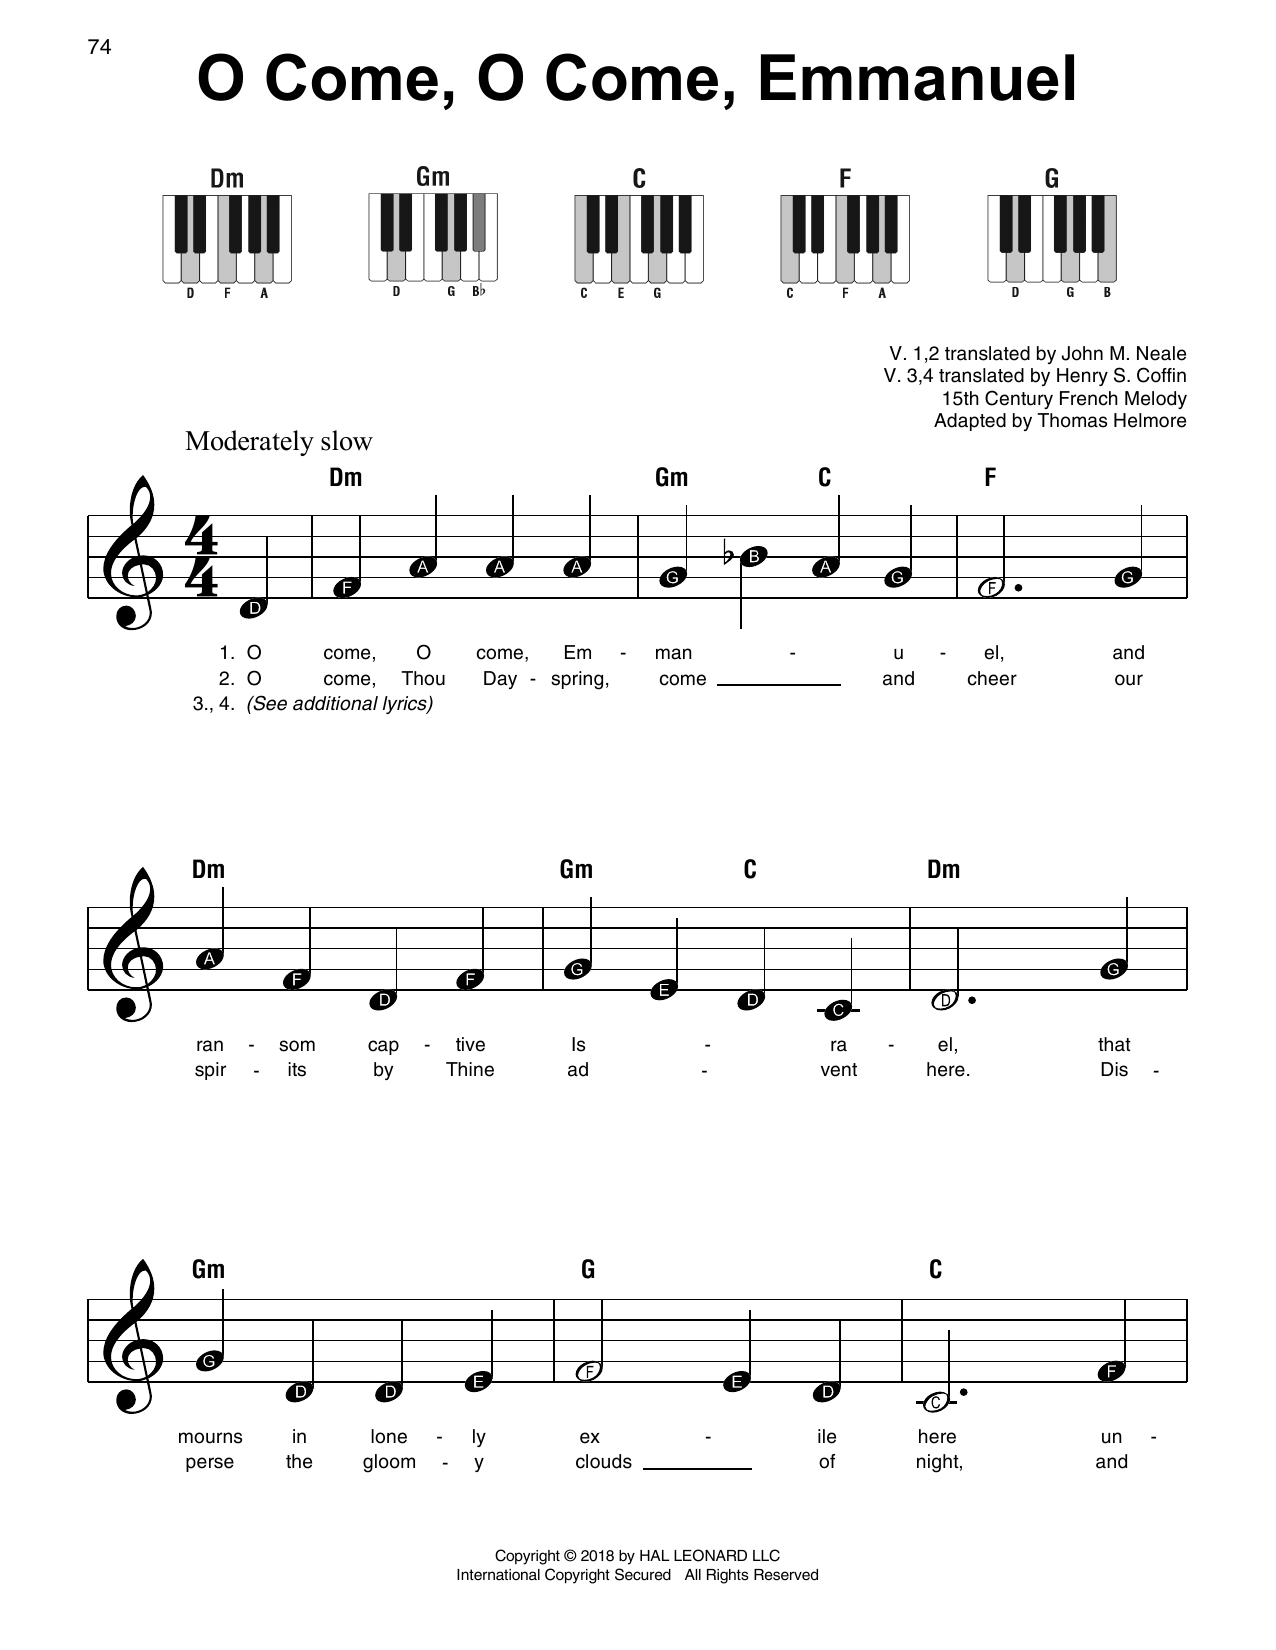 Christmas Carol O Come, O Come, Emmanuel Sheet Music Notes & Chords for Violin and Piano - Download or Print PDF